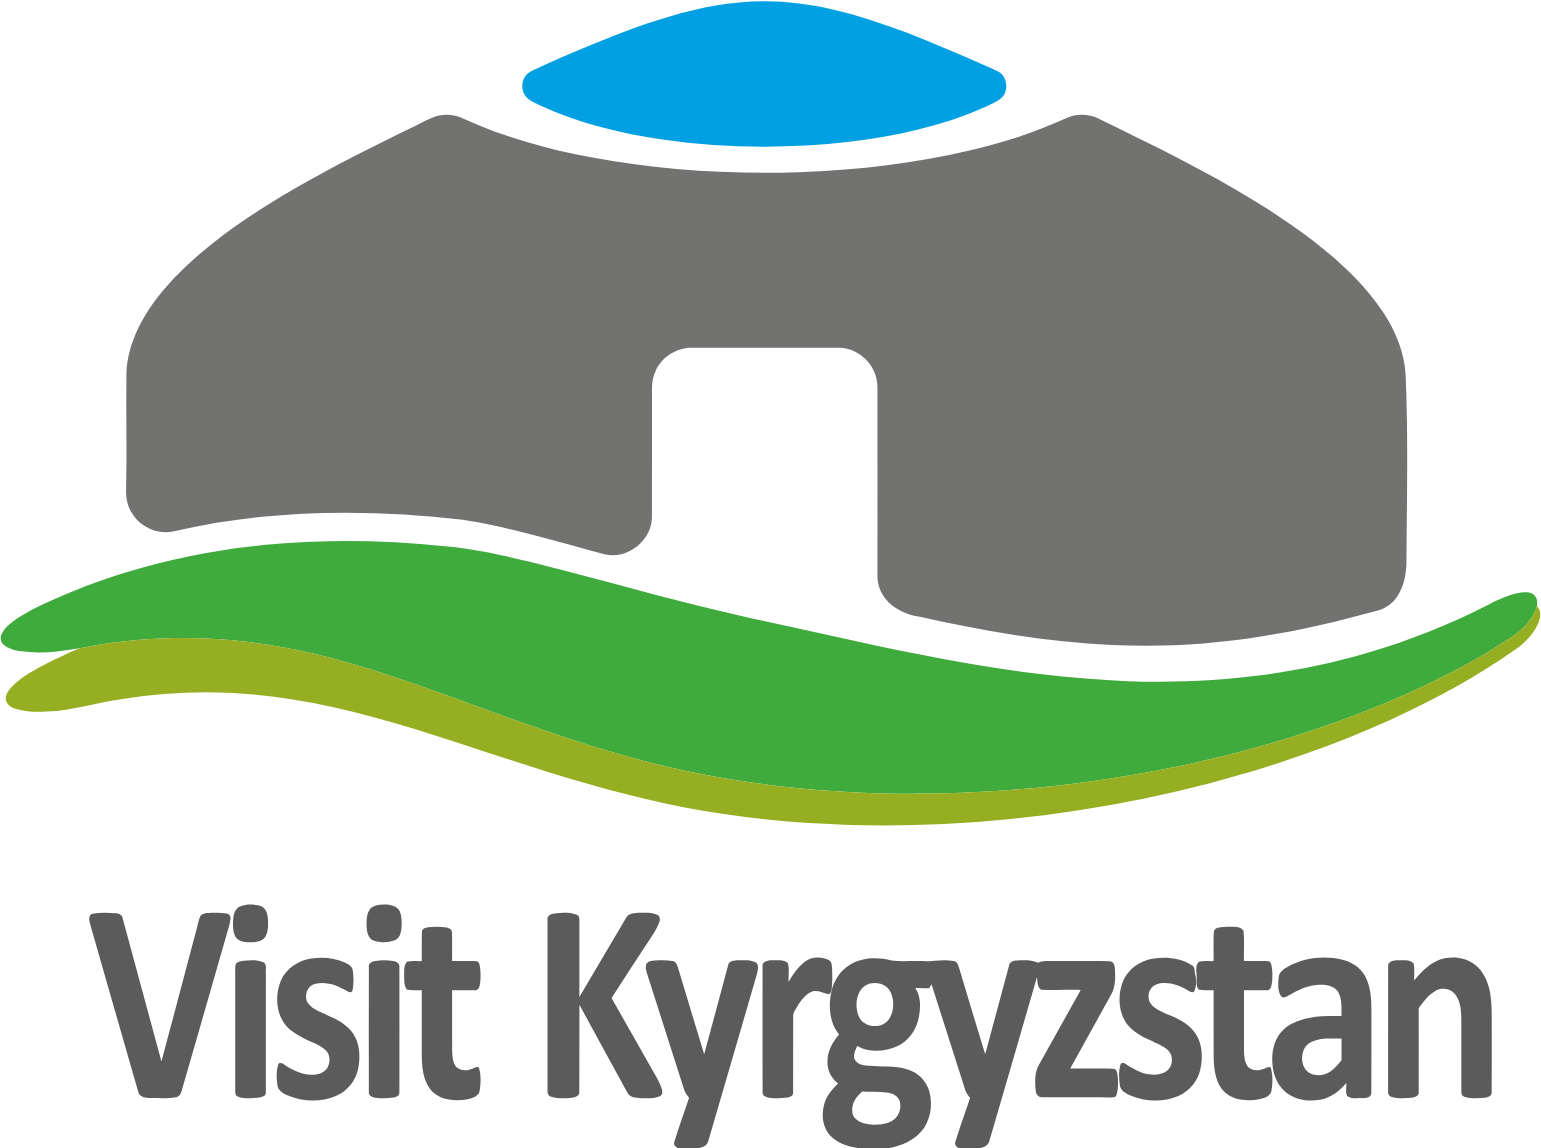 Visit Kyrgyzstan logo.